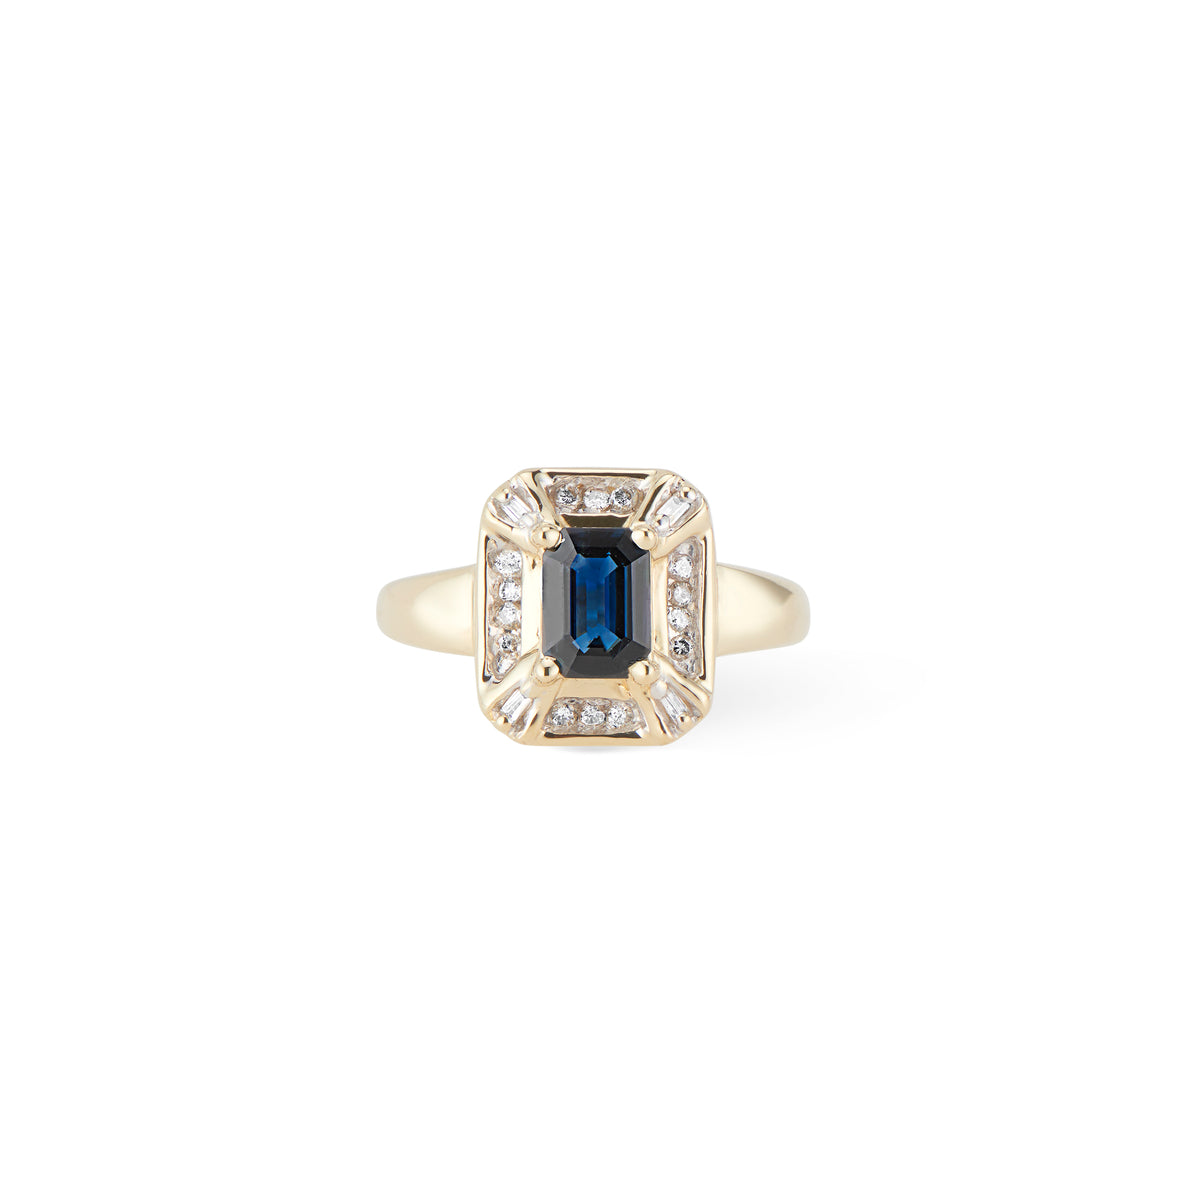 Vintage 14K Yellow Gold Diamond and Emerald Cut sapphire Dress ring